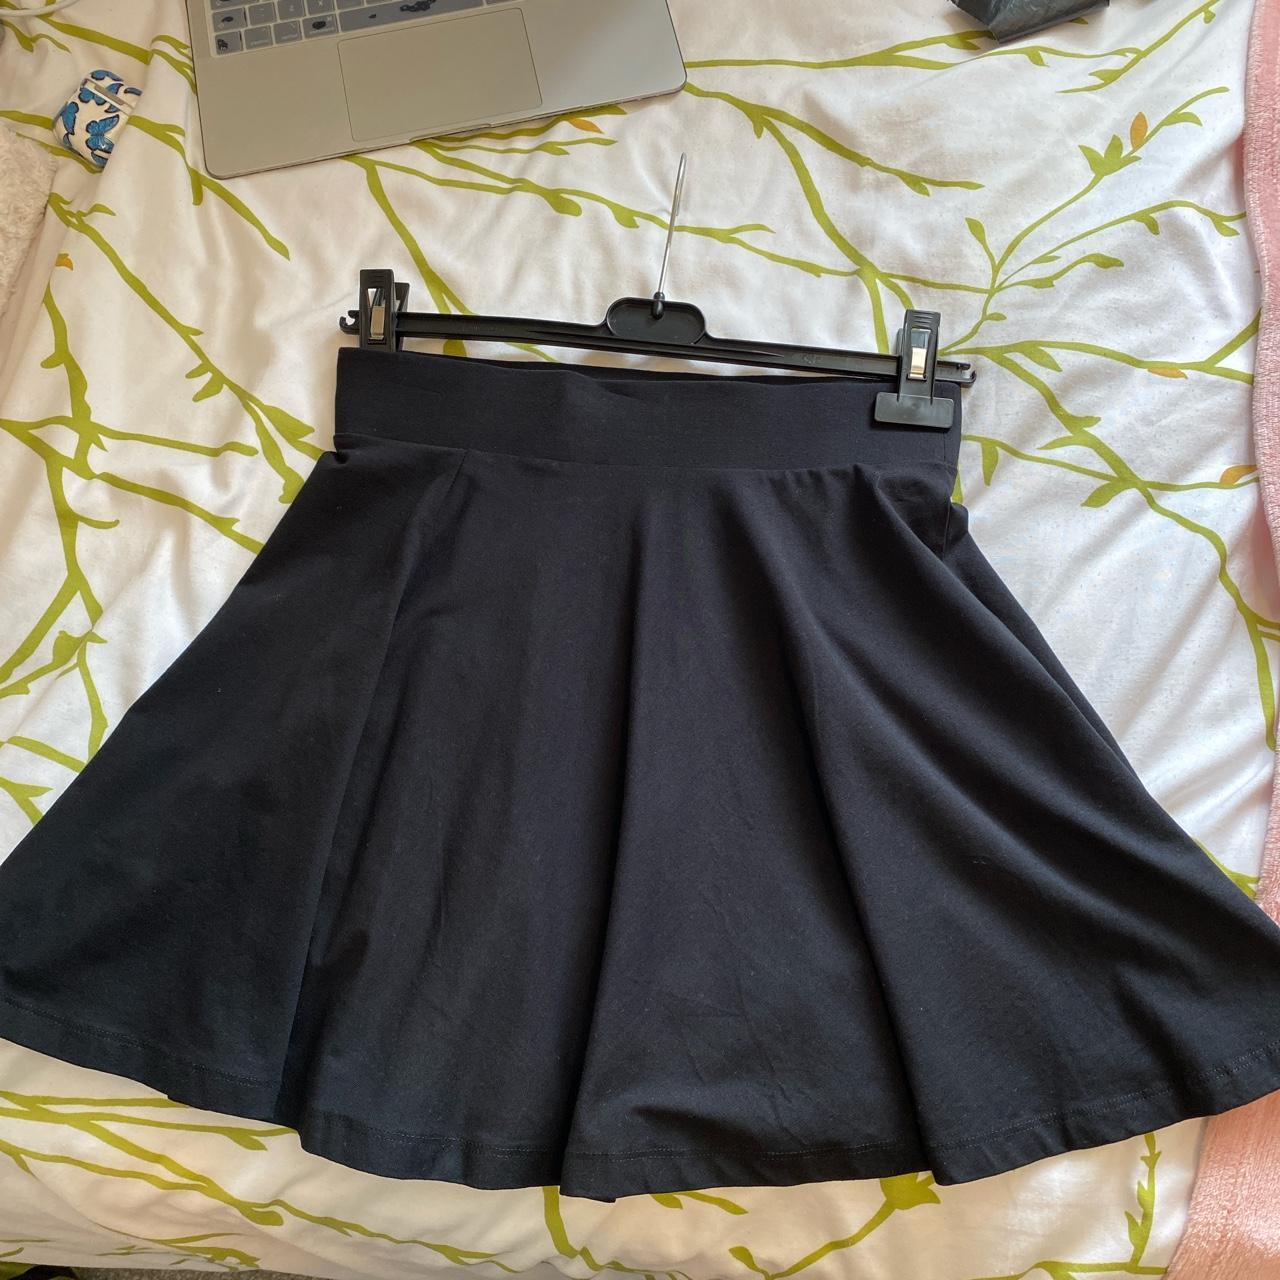 Black tennis skirt Hardly worn - Depop